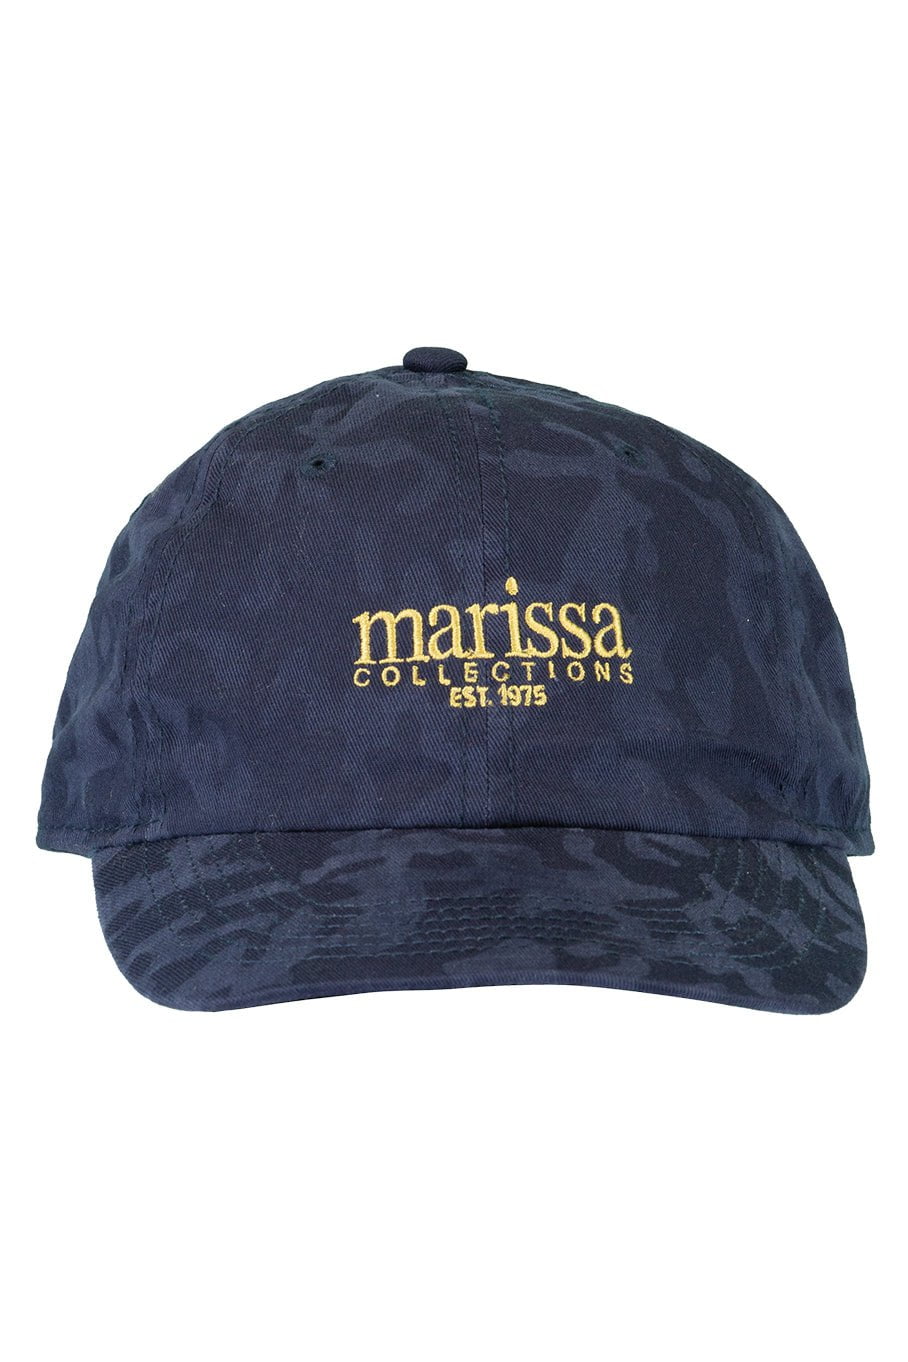 MARISSA COLLECTIONS-Navy Camo Hat-CAMO